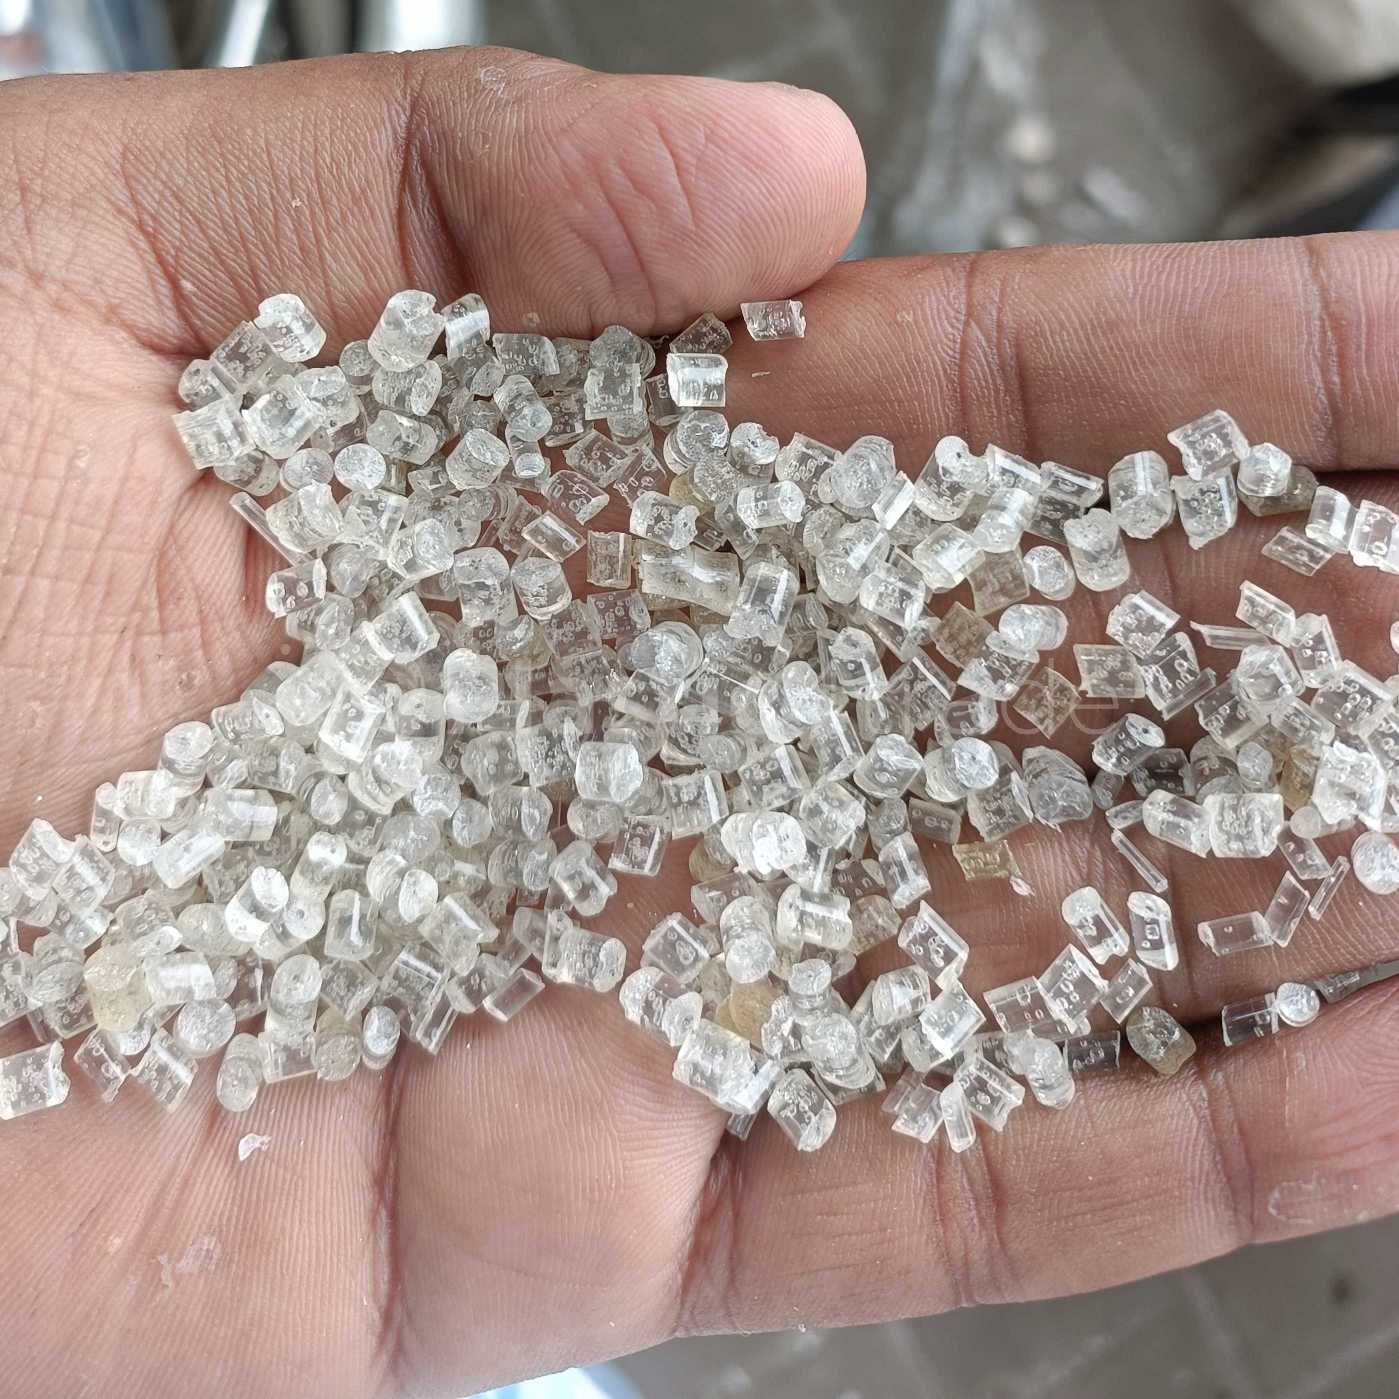 INJECTION MOLDING HIPS Reprocess Granule Injection Molding delhi delhi india Plastic4trade